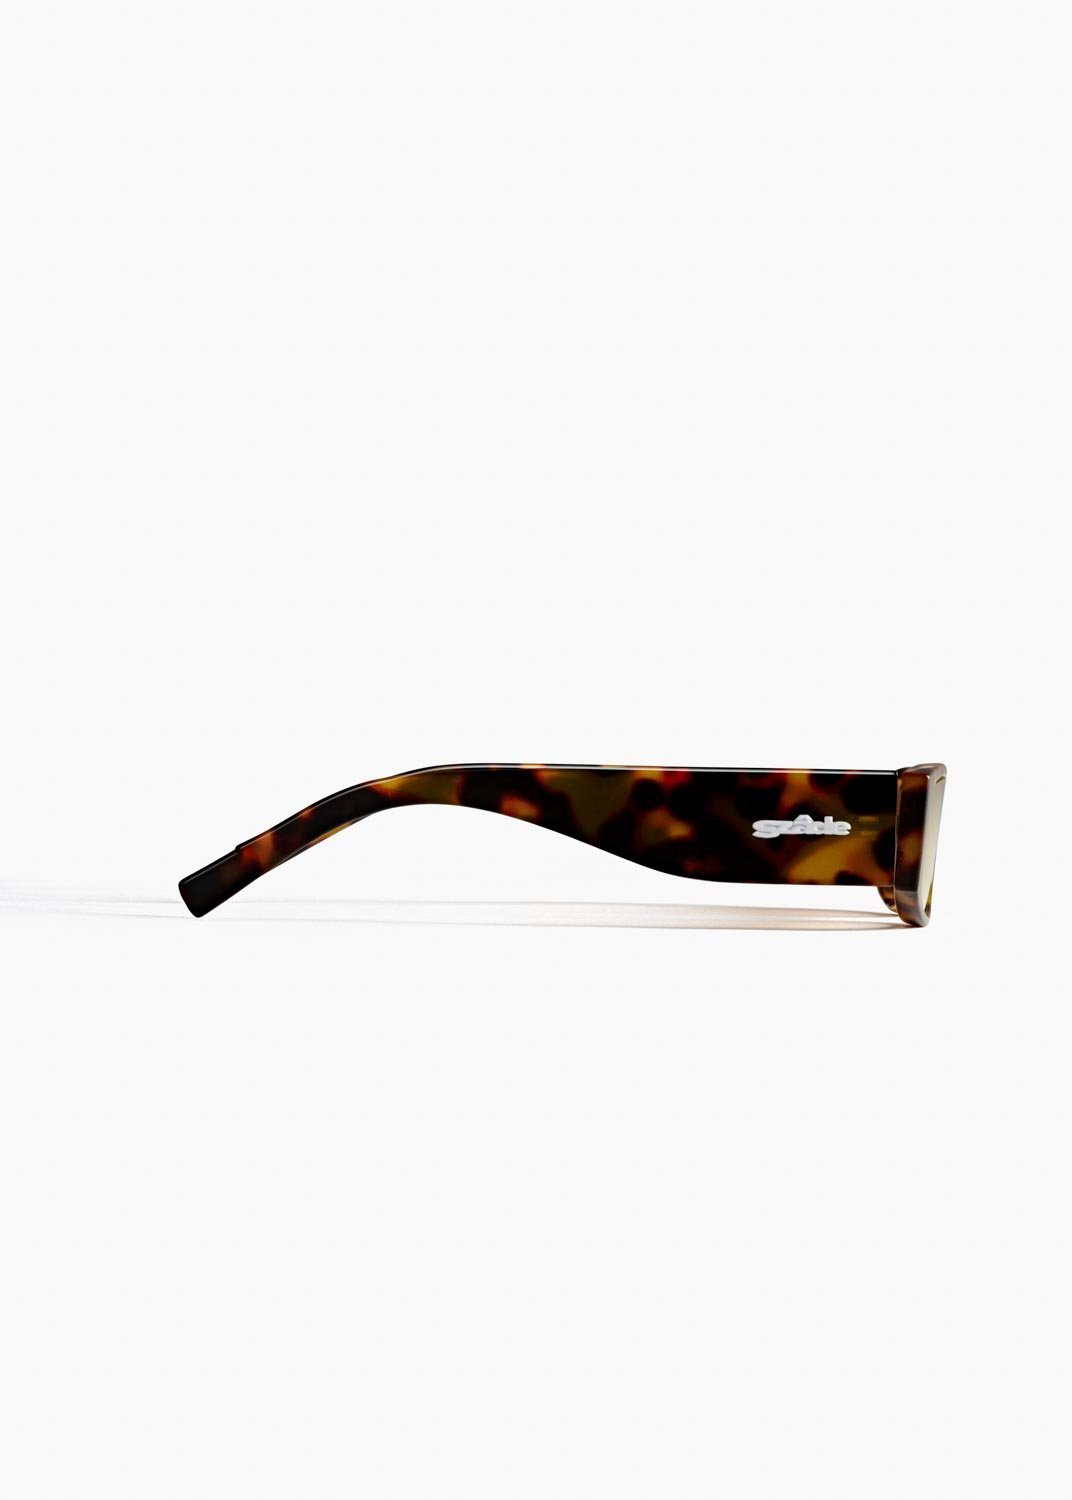 Akira Sunglasses Szade Eyewear 